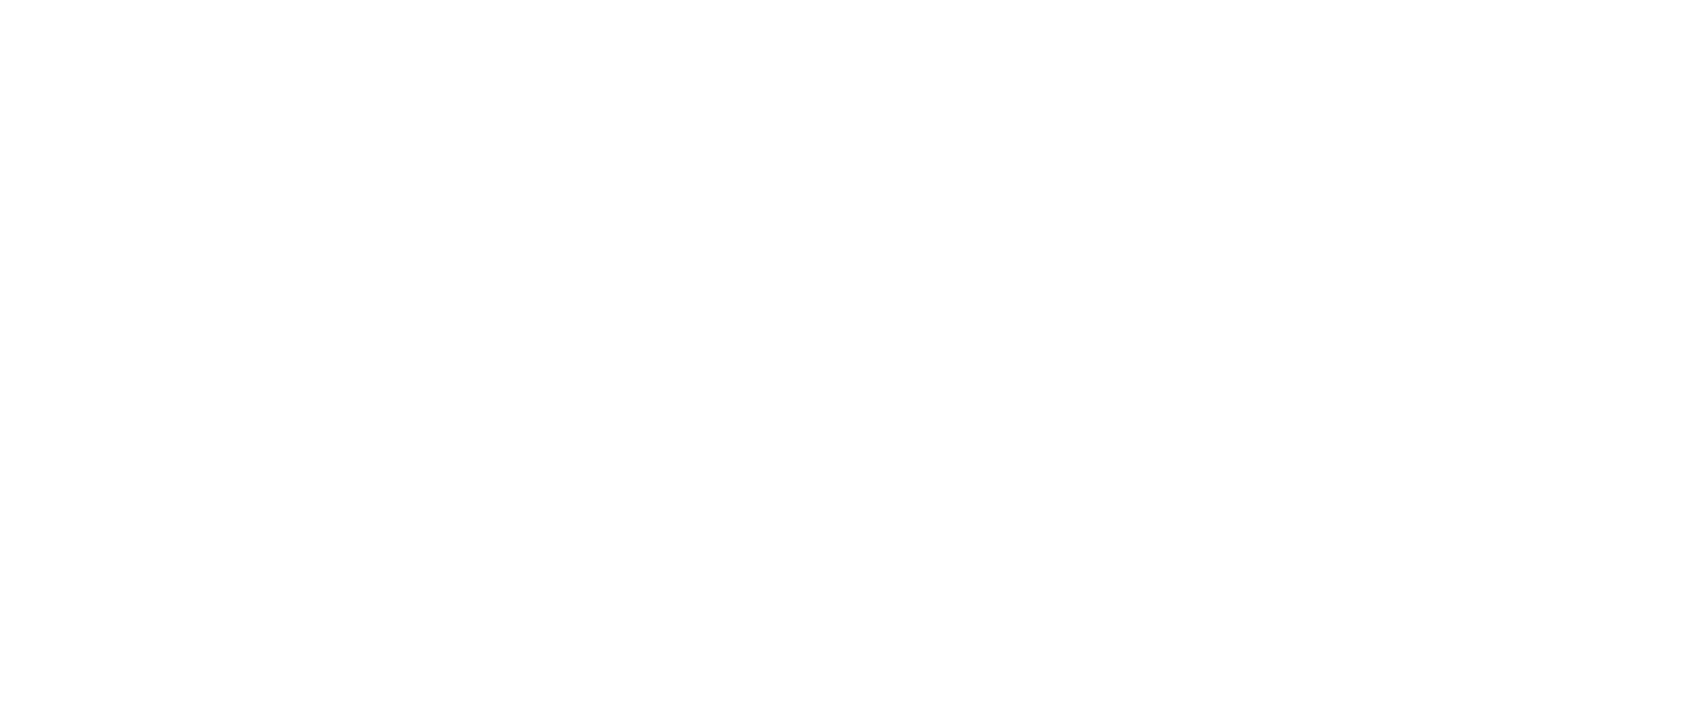 Power Corporation of Canada Logo groß für dunkle Hintergründe (transparentes PNG)